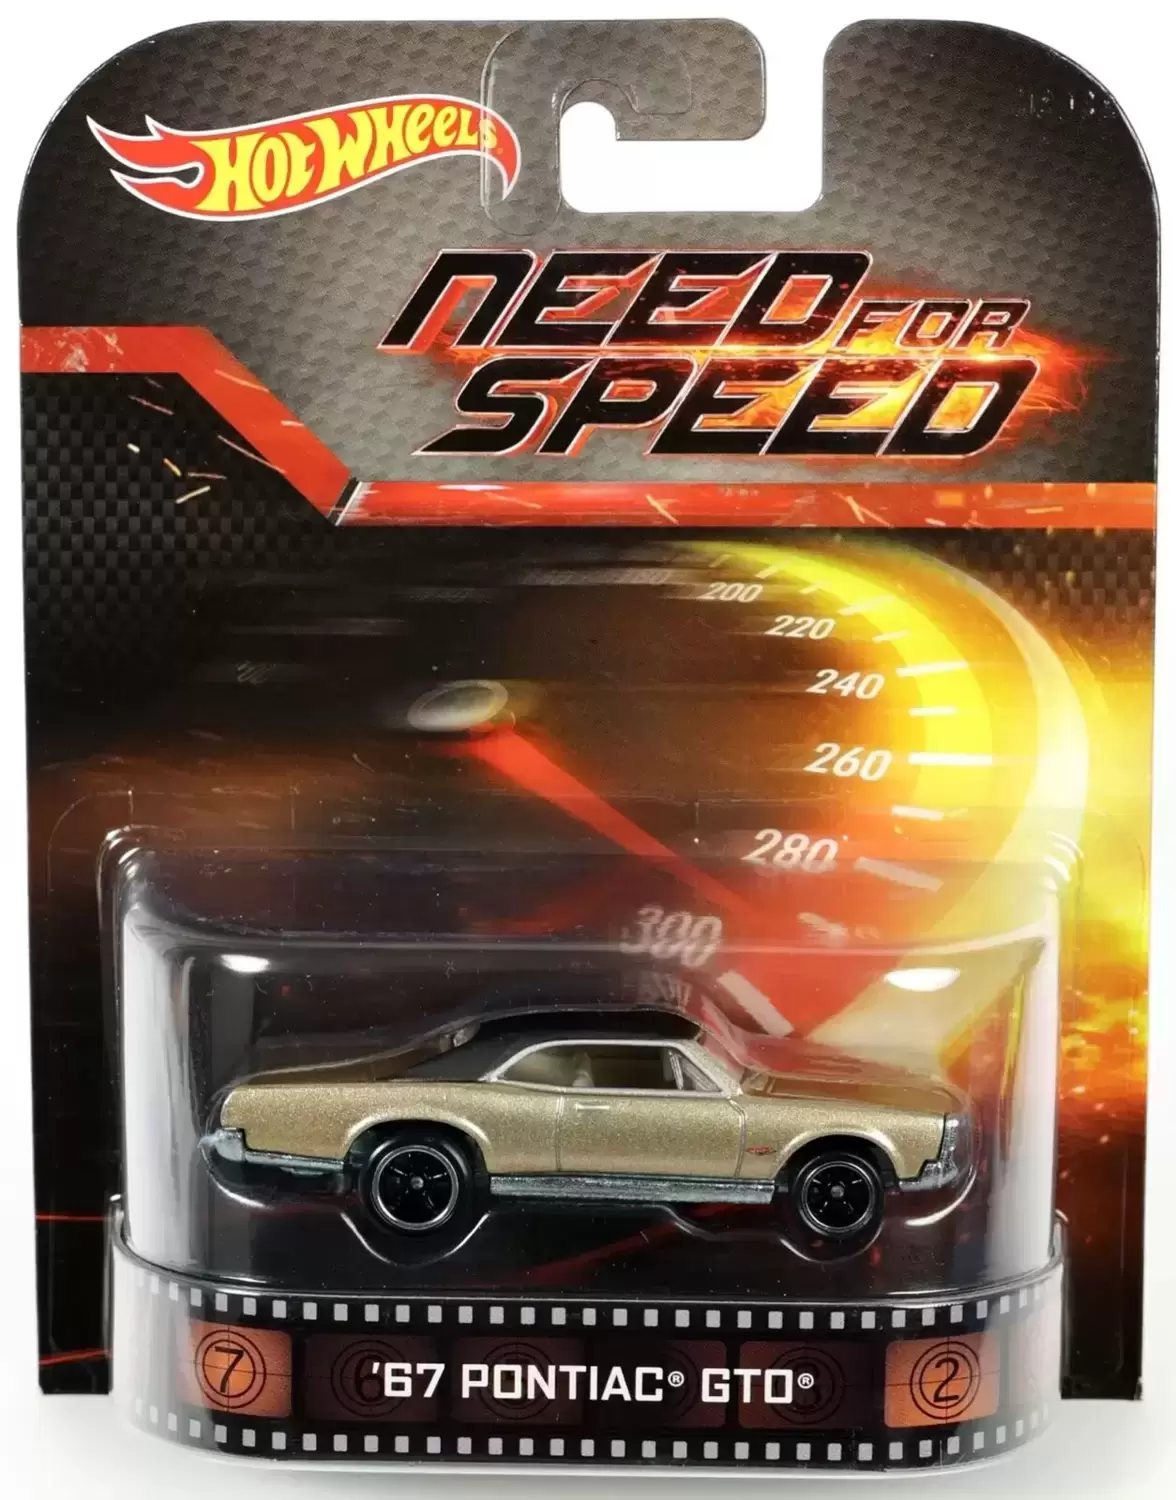 Retro Entertainment Hot Wheels - Need for Speed - 67 Pontiac GTO